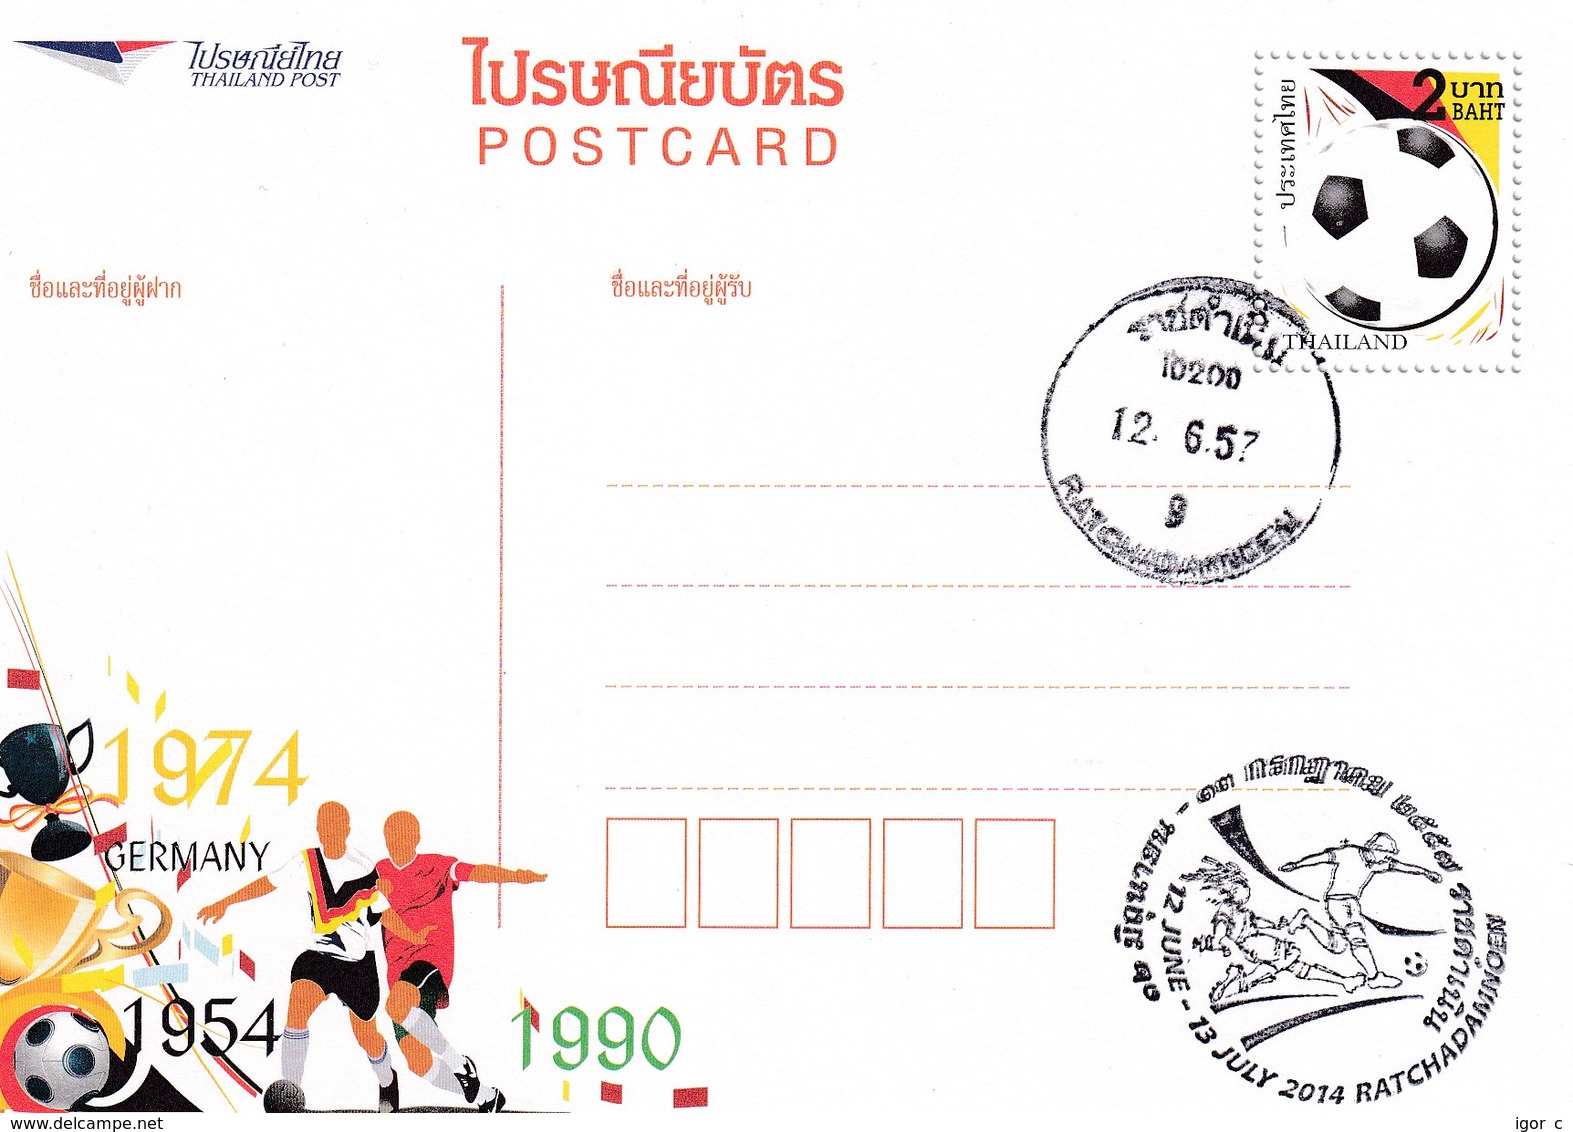 Thailand 2014 Postal Stationery Card: Football Fussball Soccer Calcio; FIFA World Cup 1954 1974 1990 Germany Champion - 1954 – Suiza